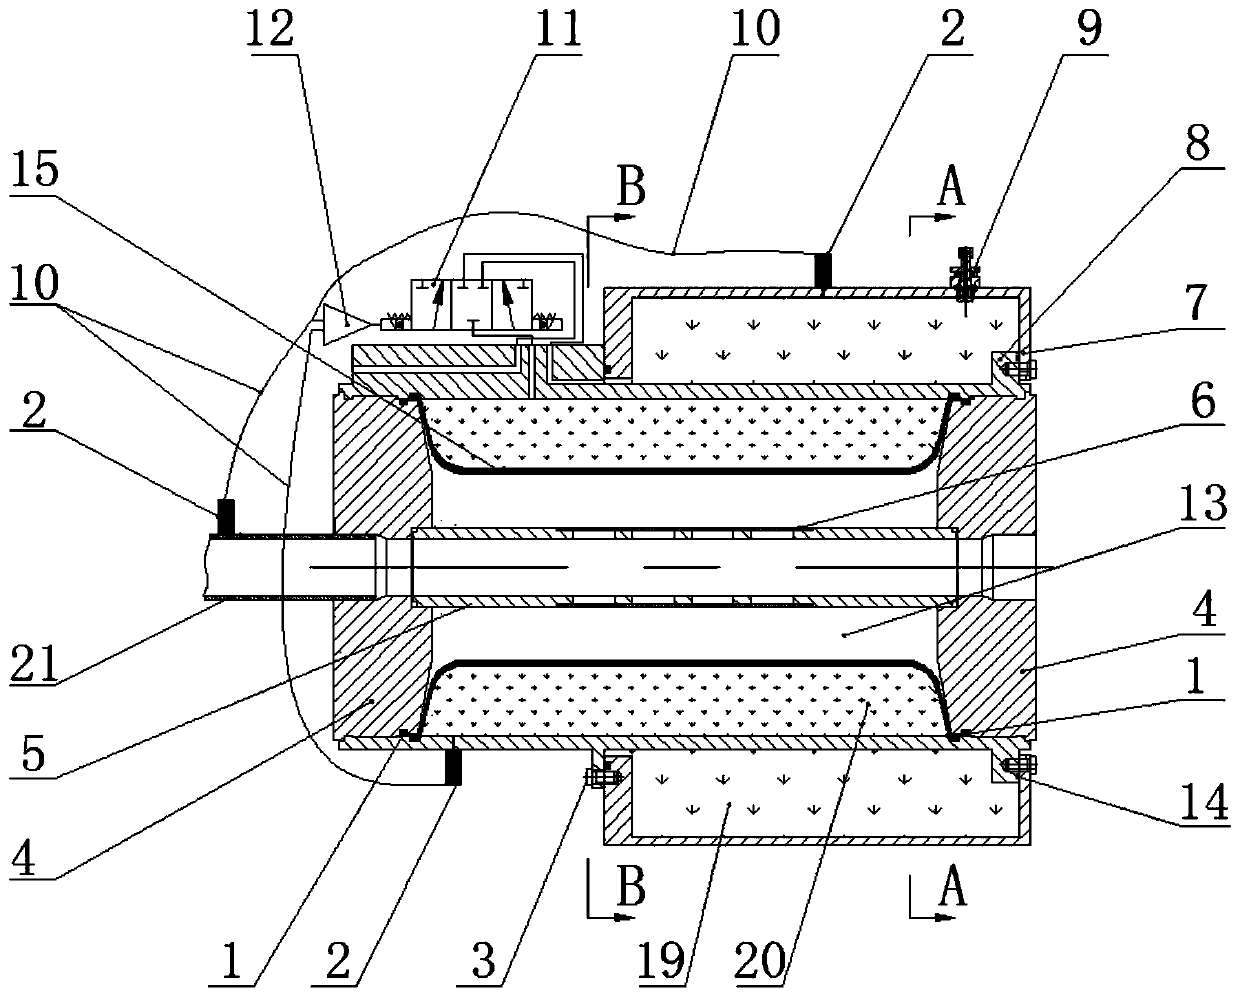 A pressure-adaptive broadband capsule hydraulic muffler device and method